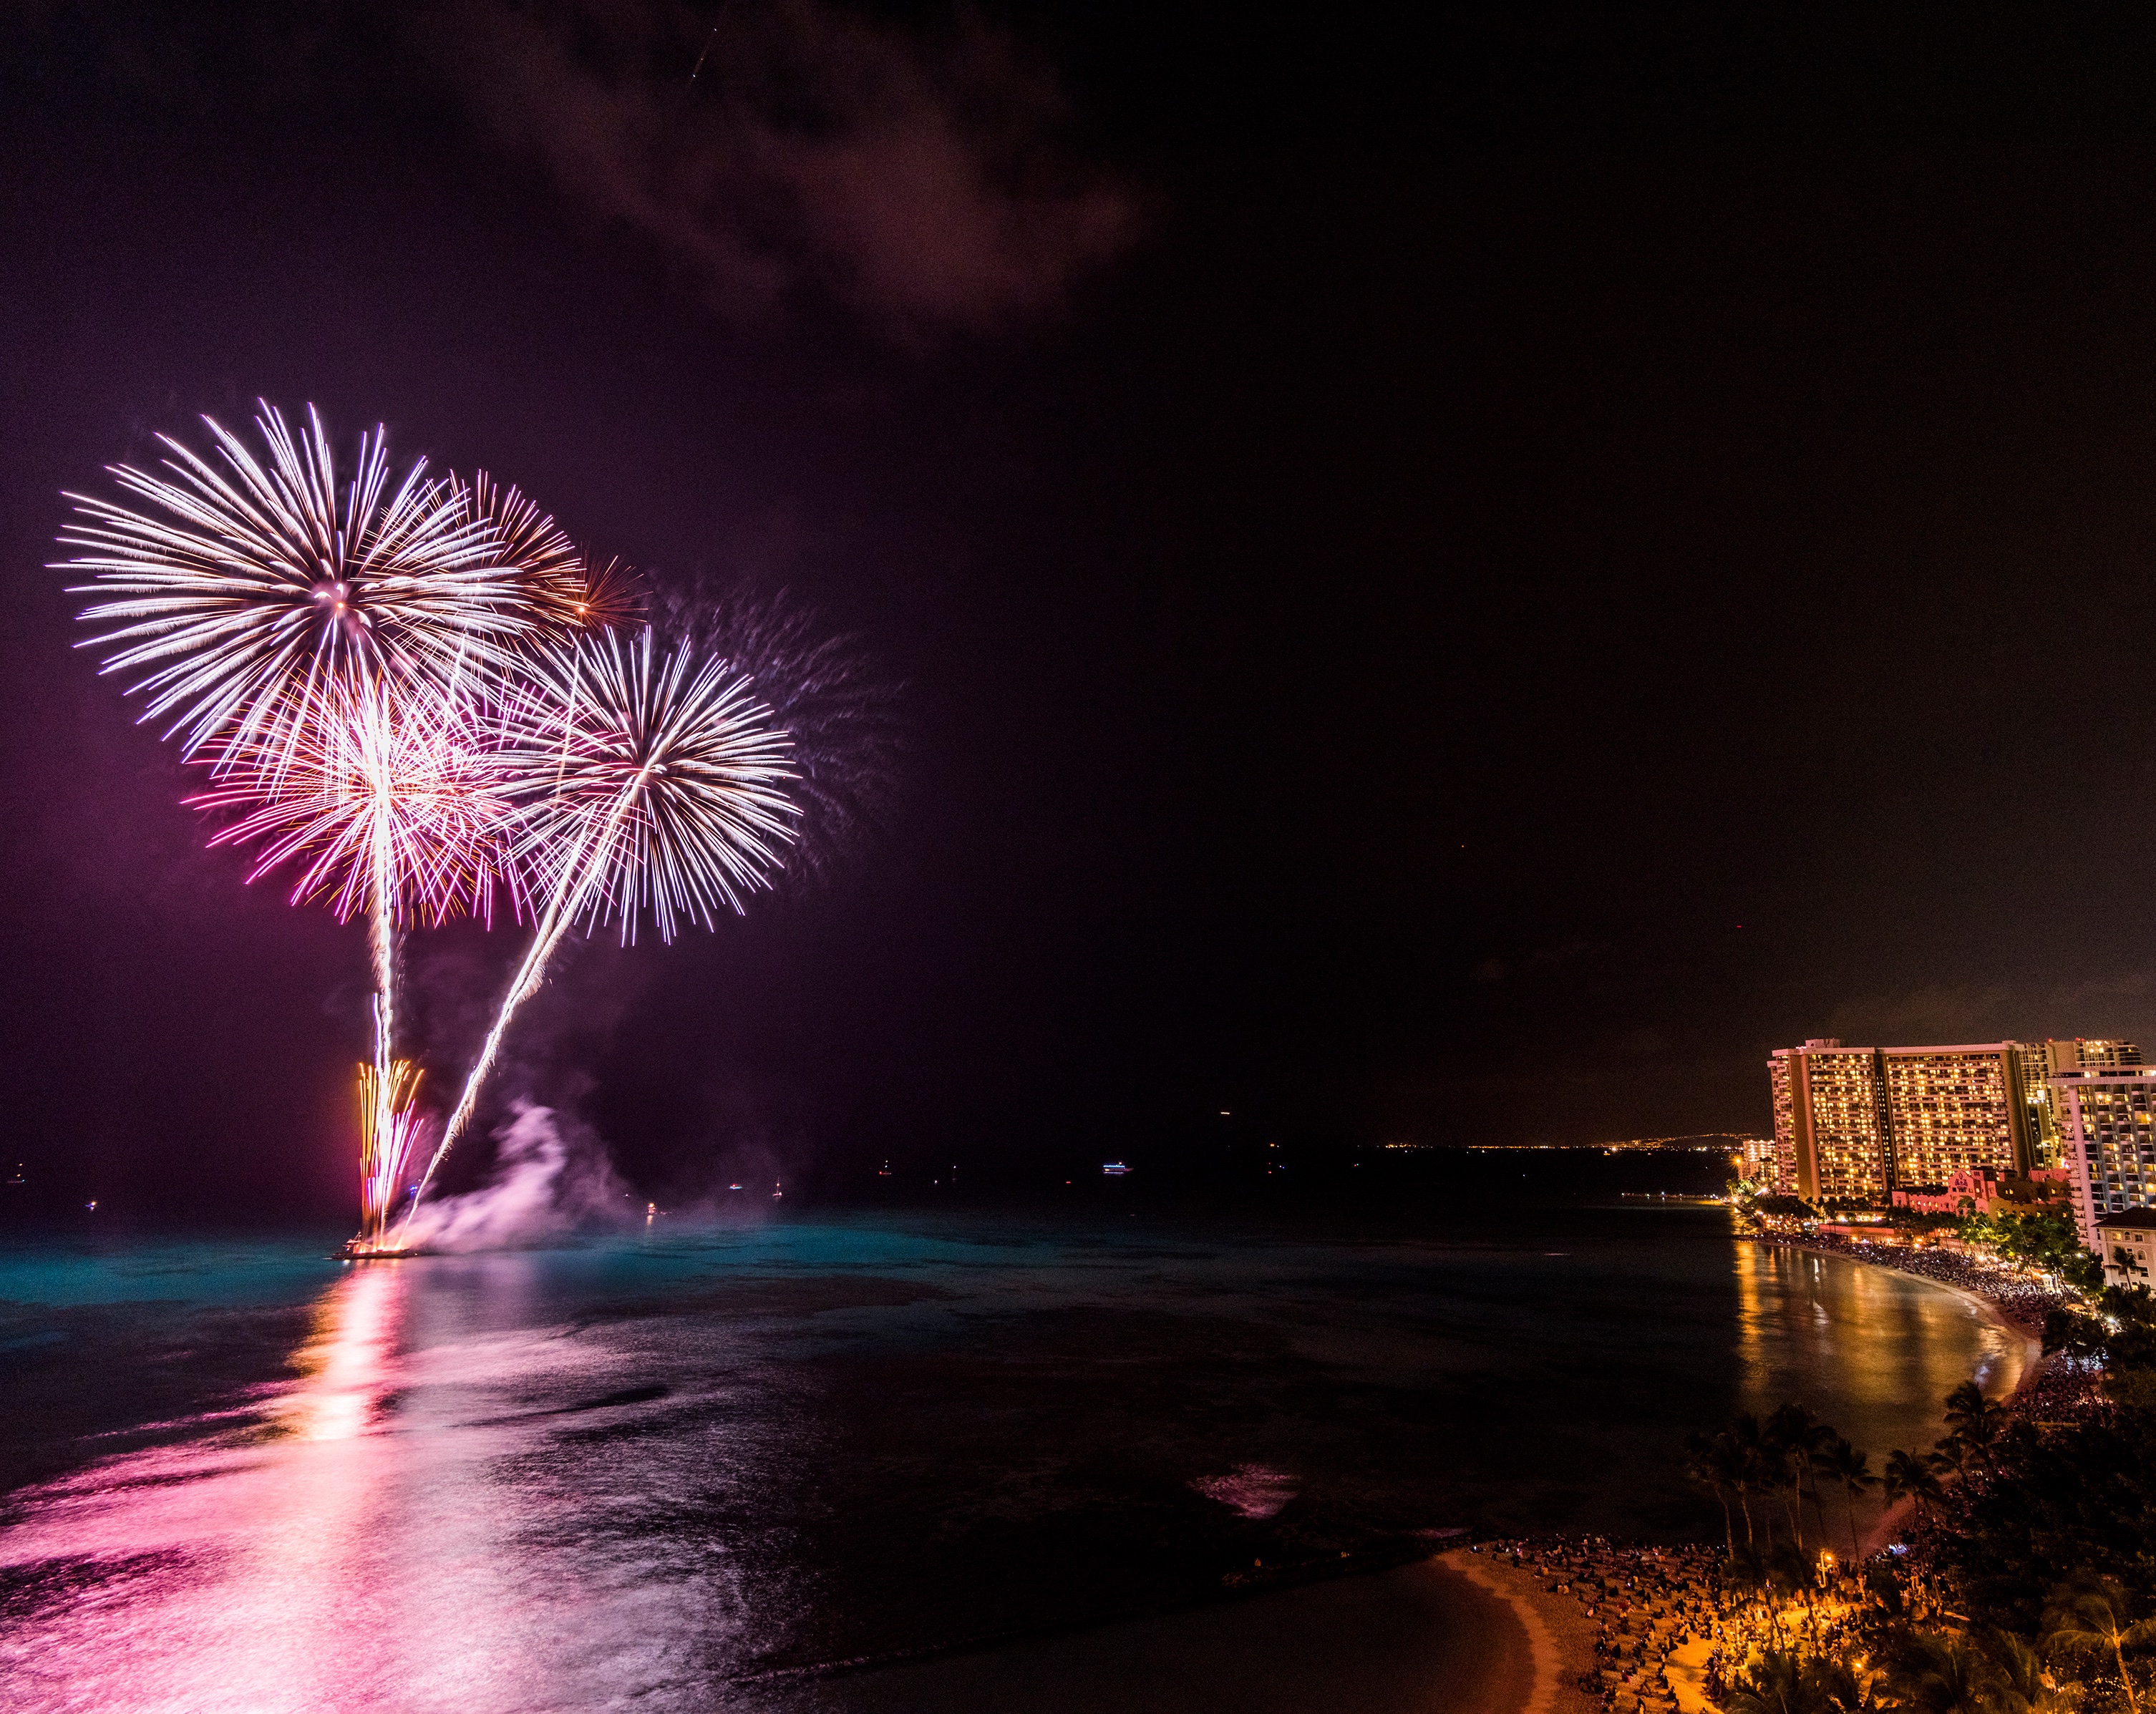 The Nagaoka Fireworks show in Waikiki Beach begins at 8:30 p.m. on Sunday, March 8, 2020.